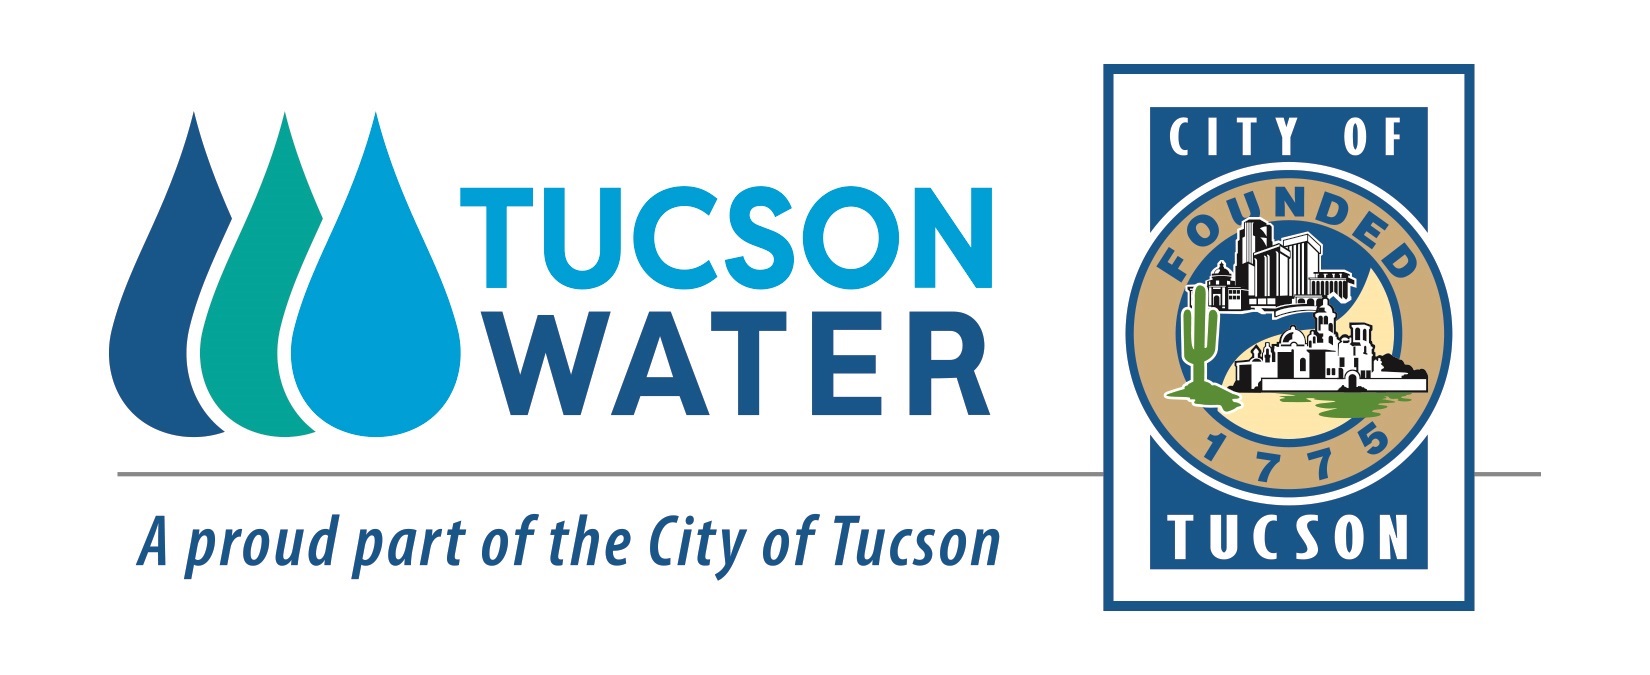 Tucson water